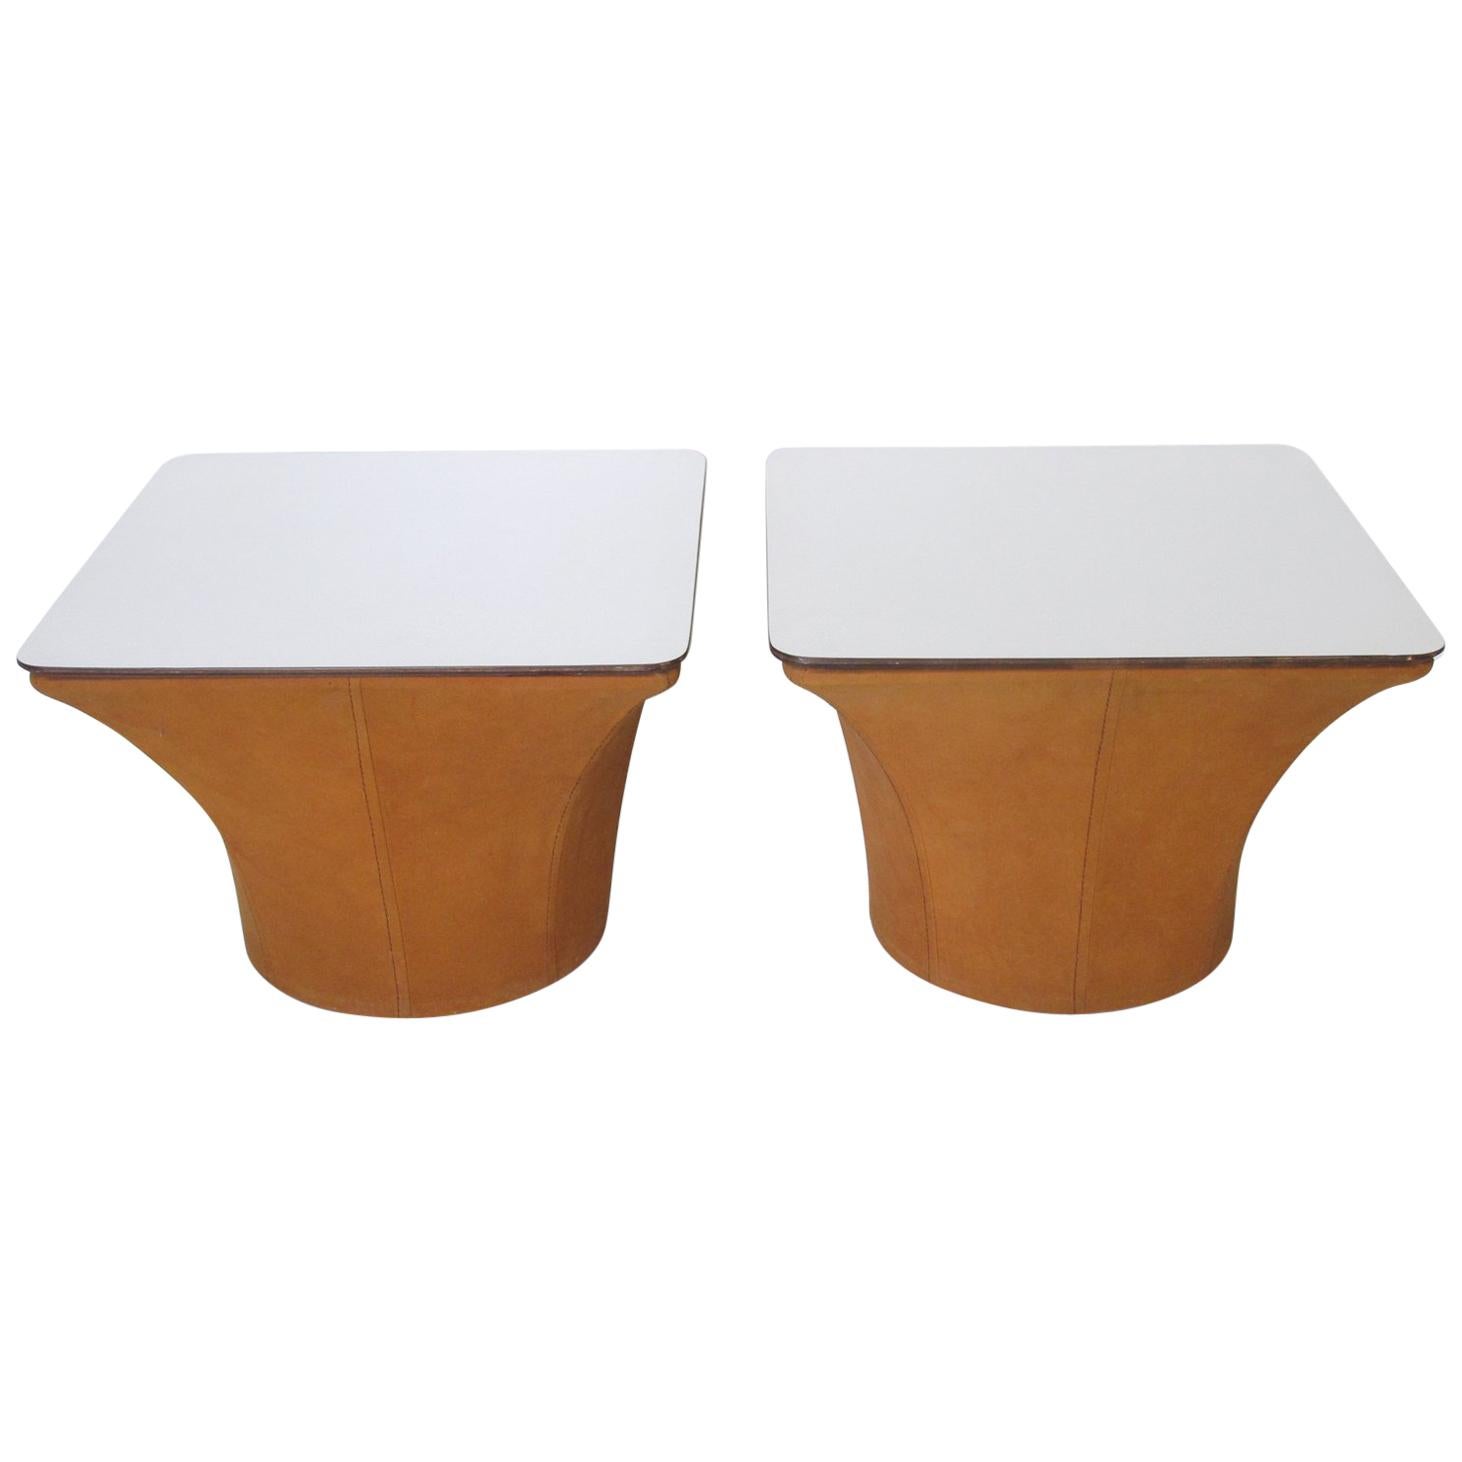 1960s Mid-Century Modernist Pair of Side or Coffee Table Mushroom Model